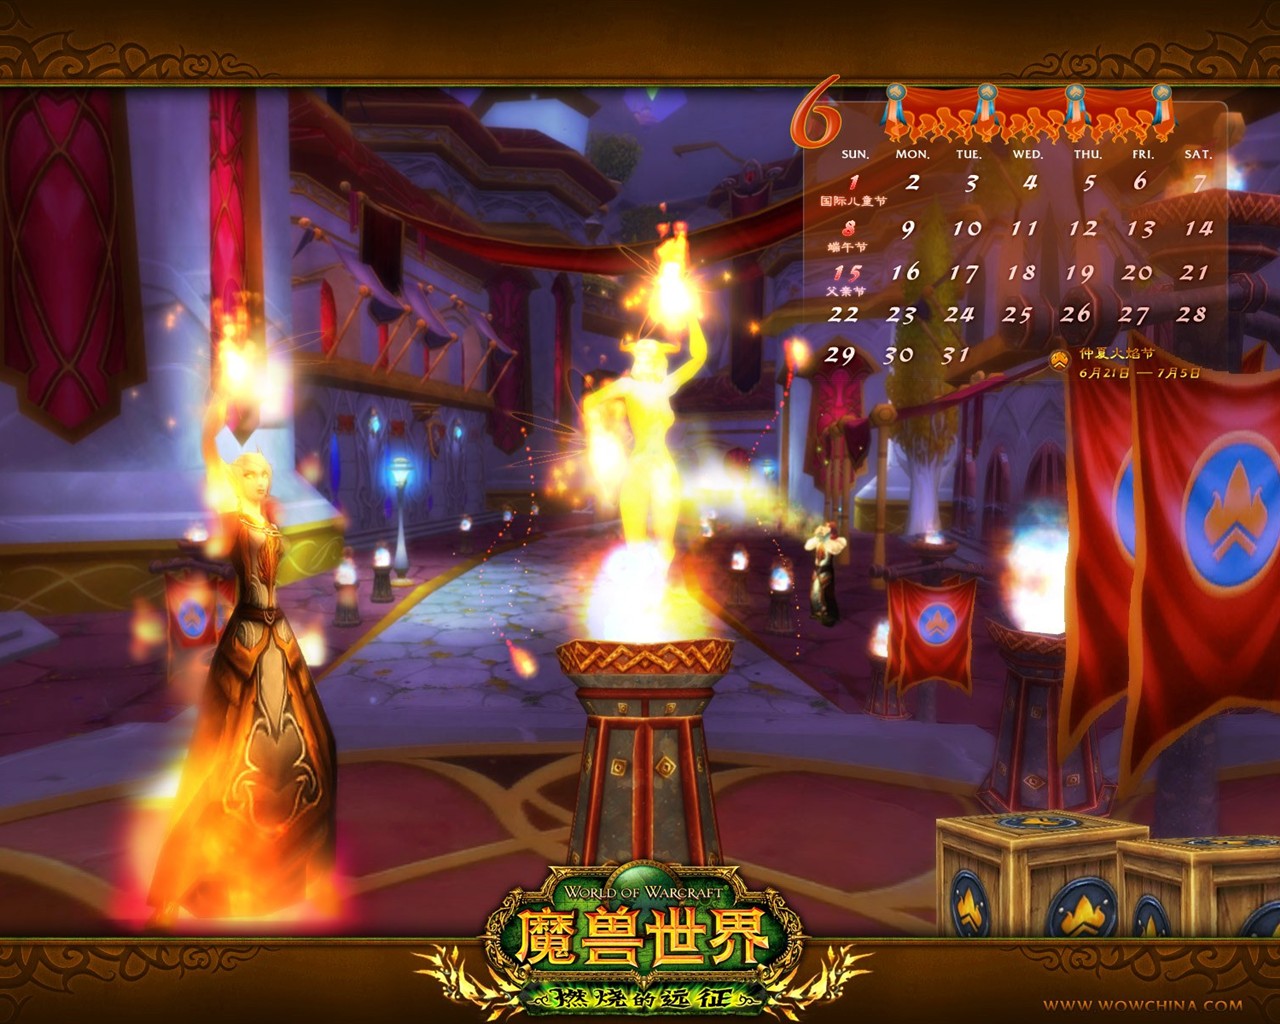 World of Warcraft: Fond d'écran officiel de Burning Crusade (2) #24 - 1280x1024